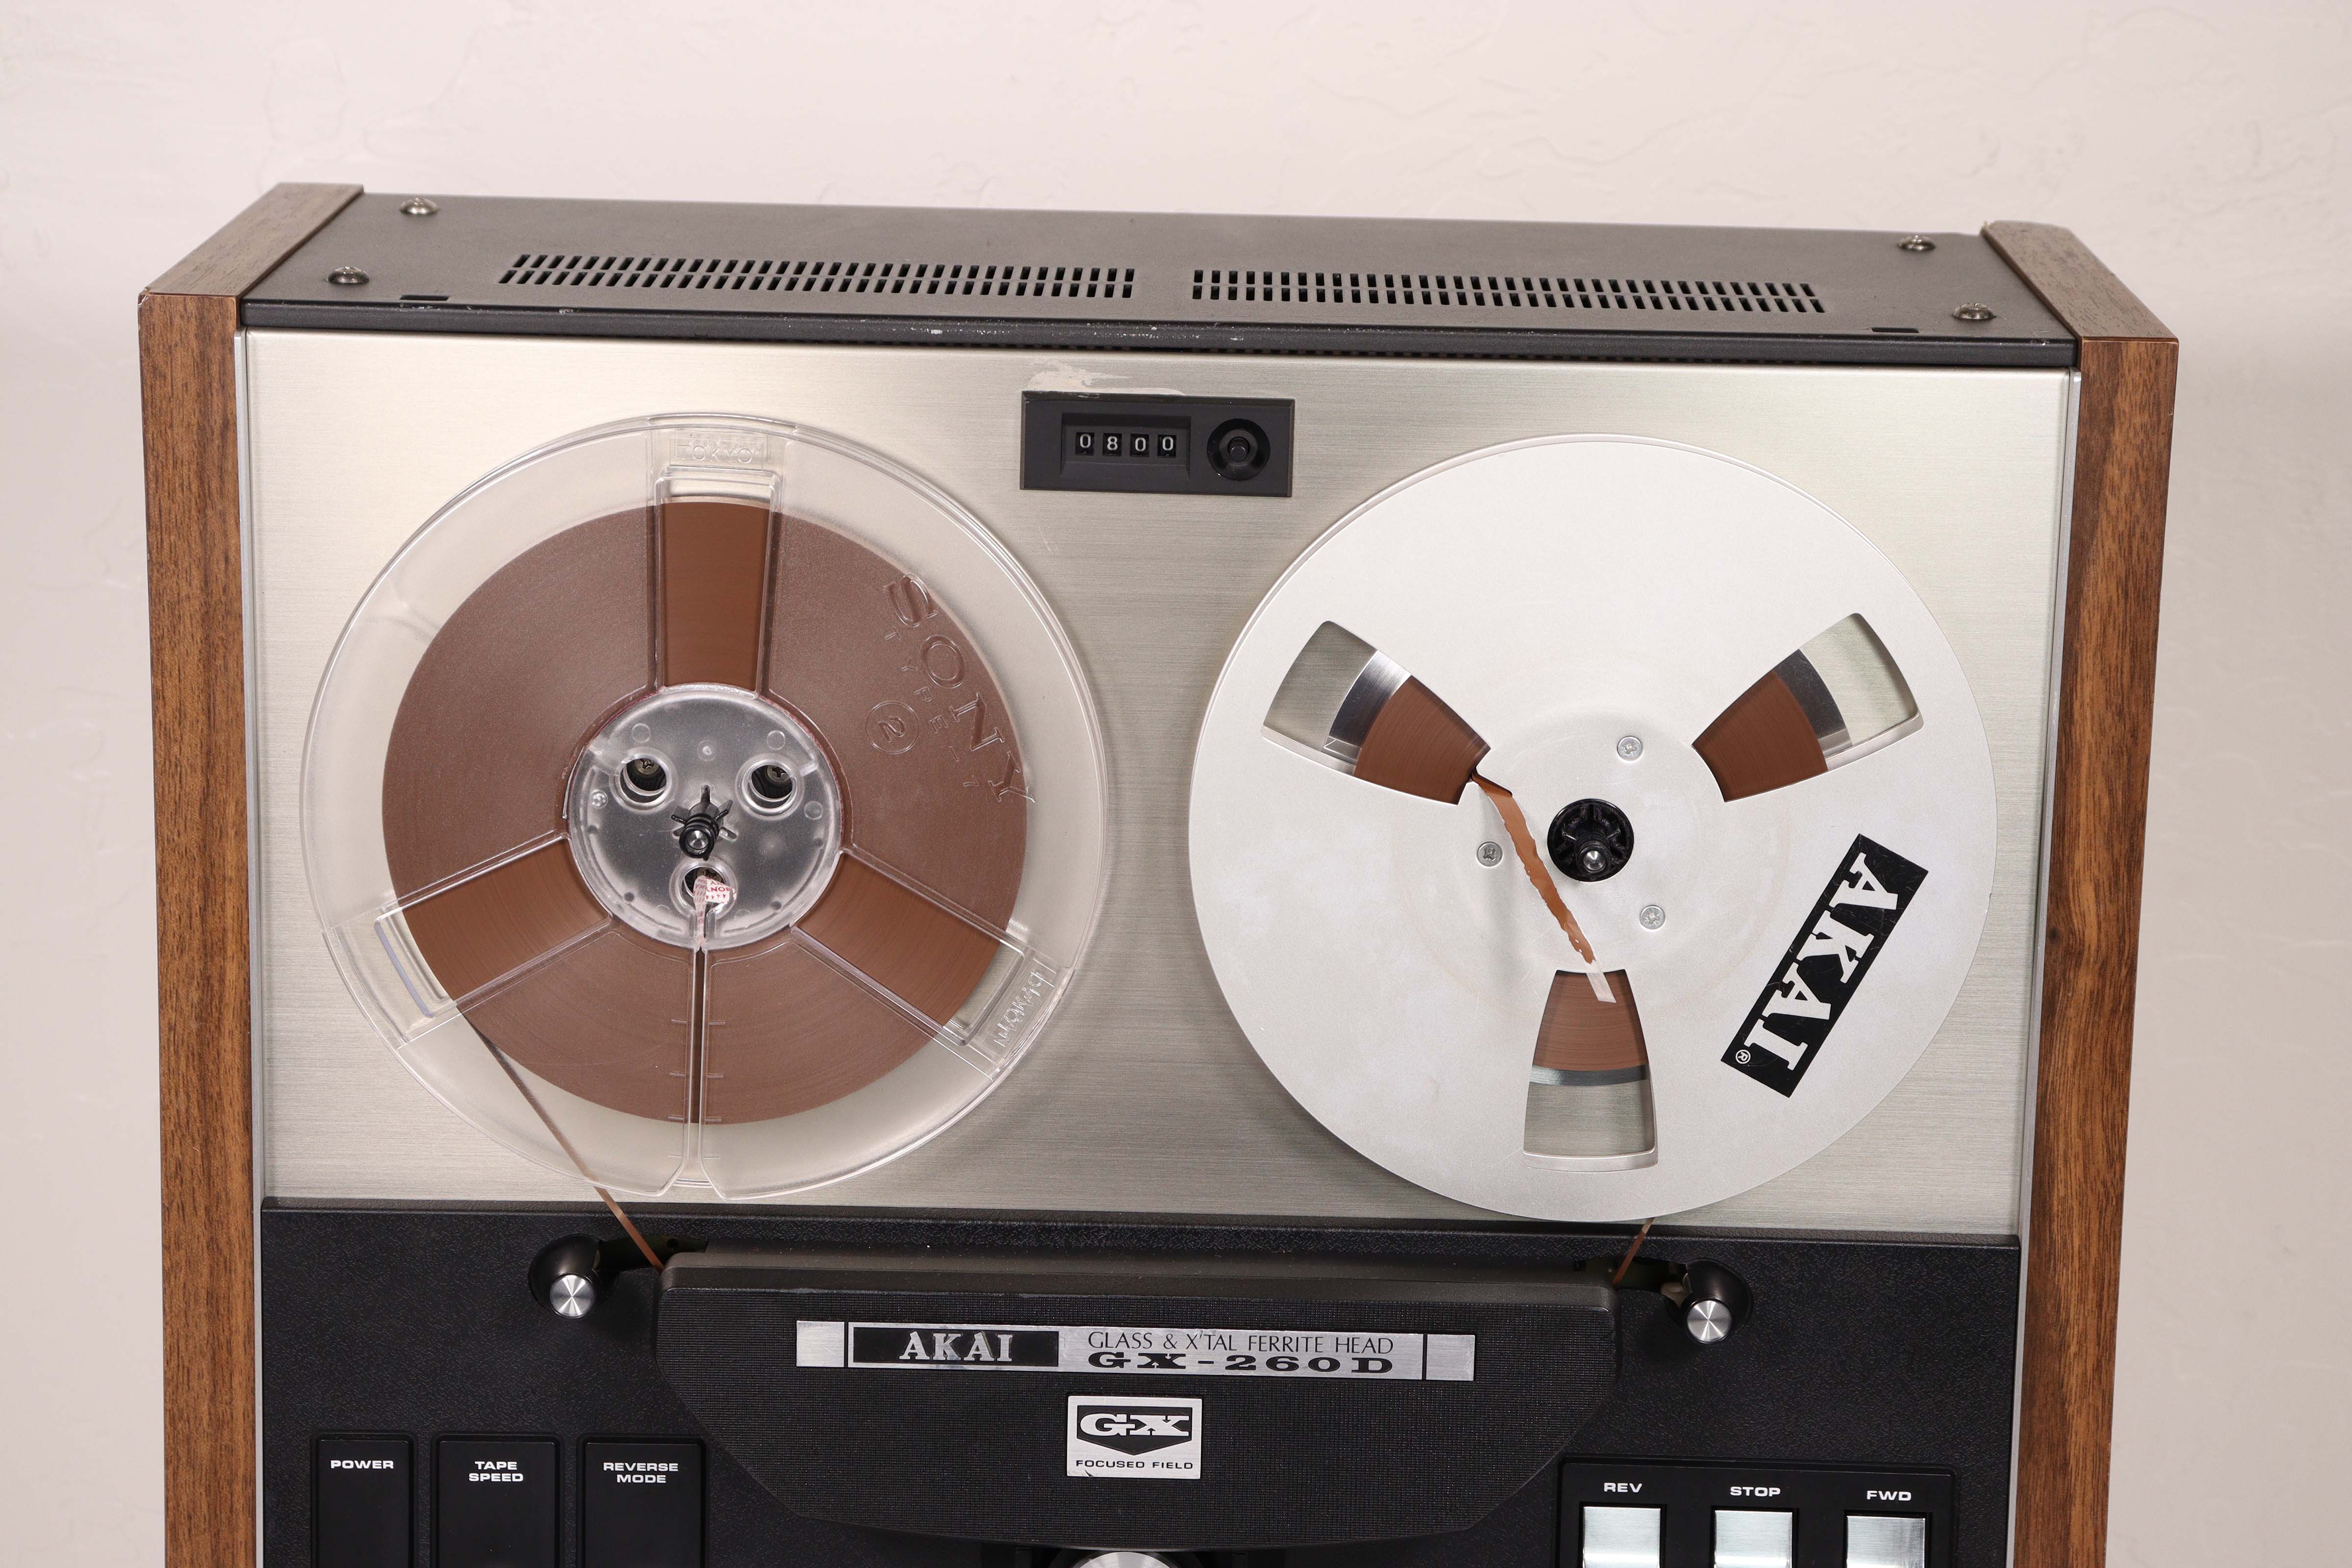 Akai reel to reel tape recorder Model GX-215D Photo #2267144 - US Audio Mart